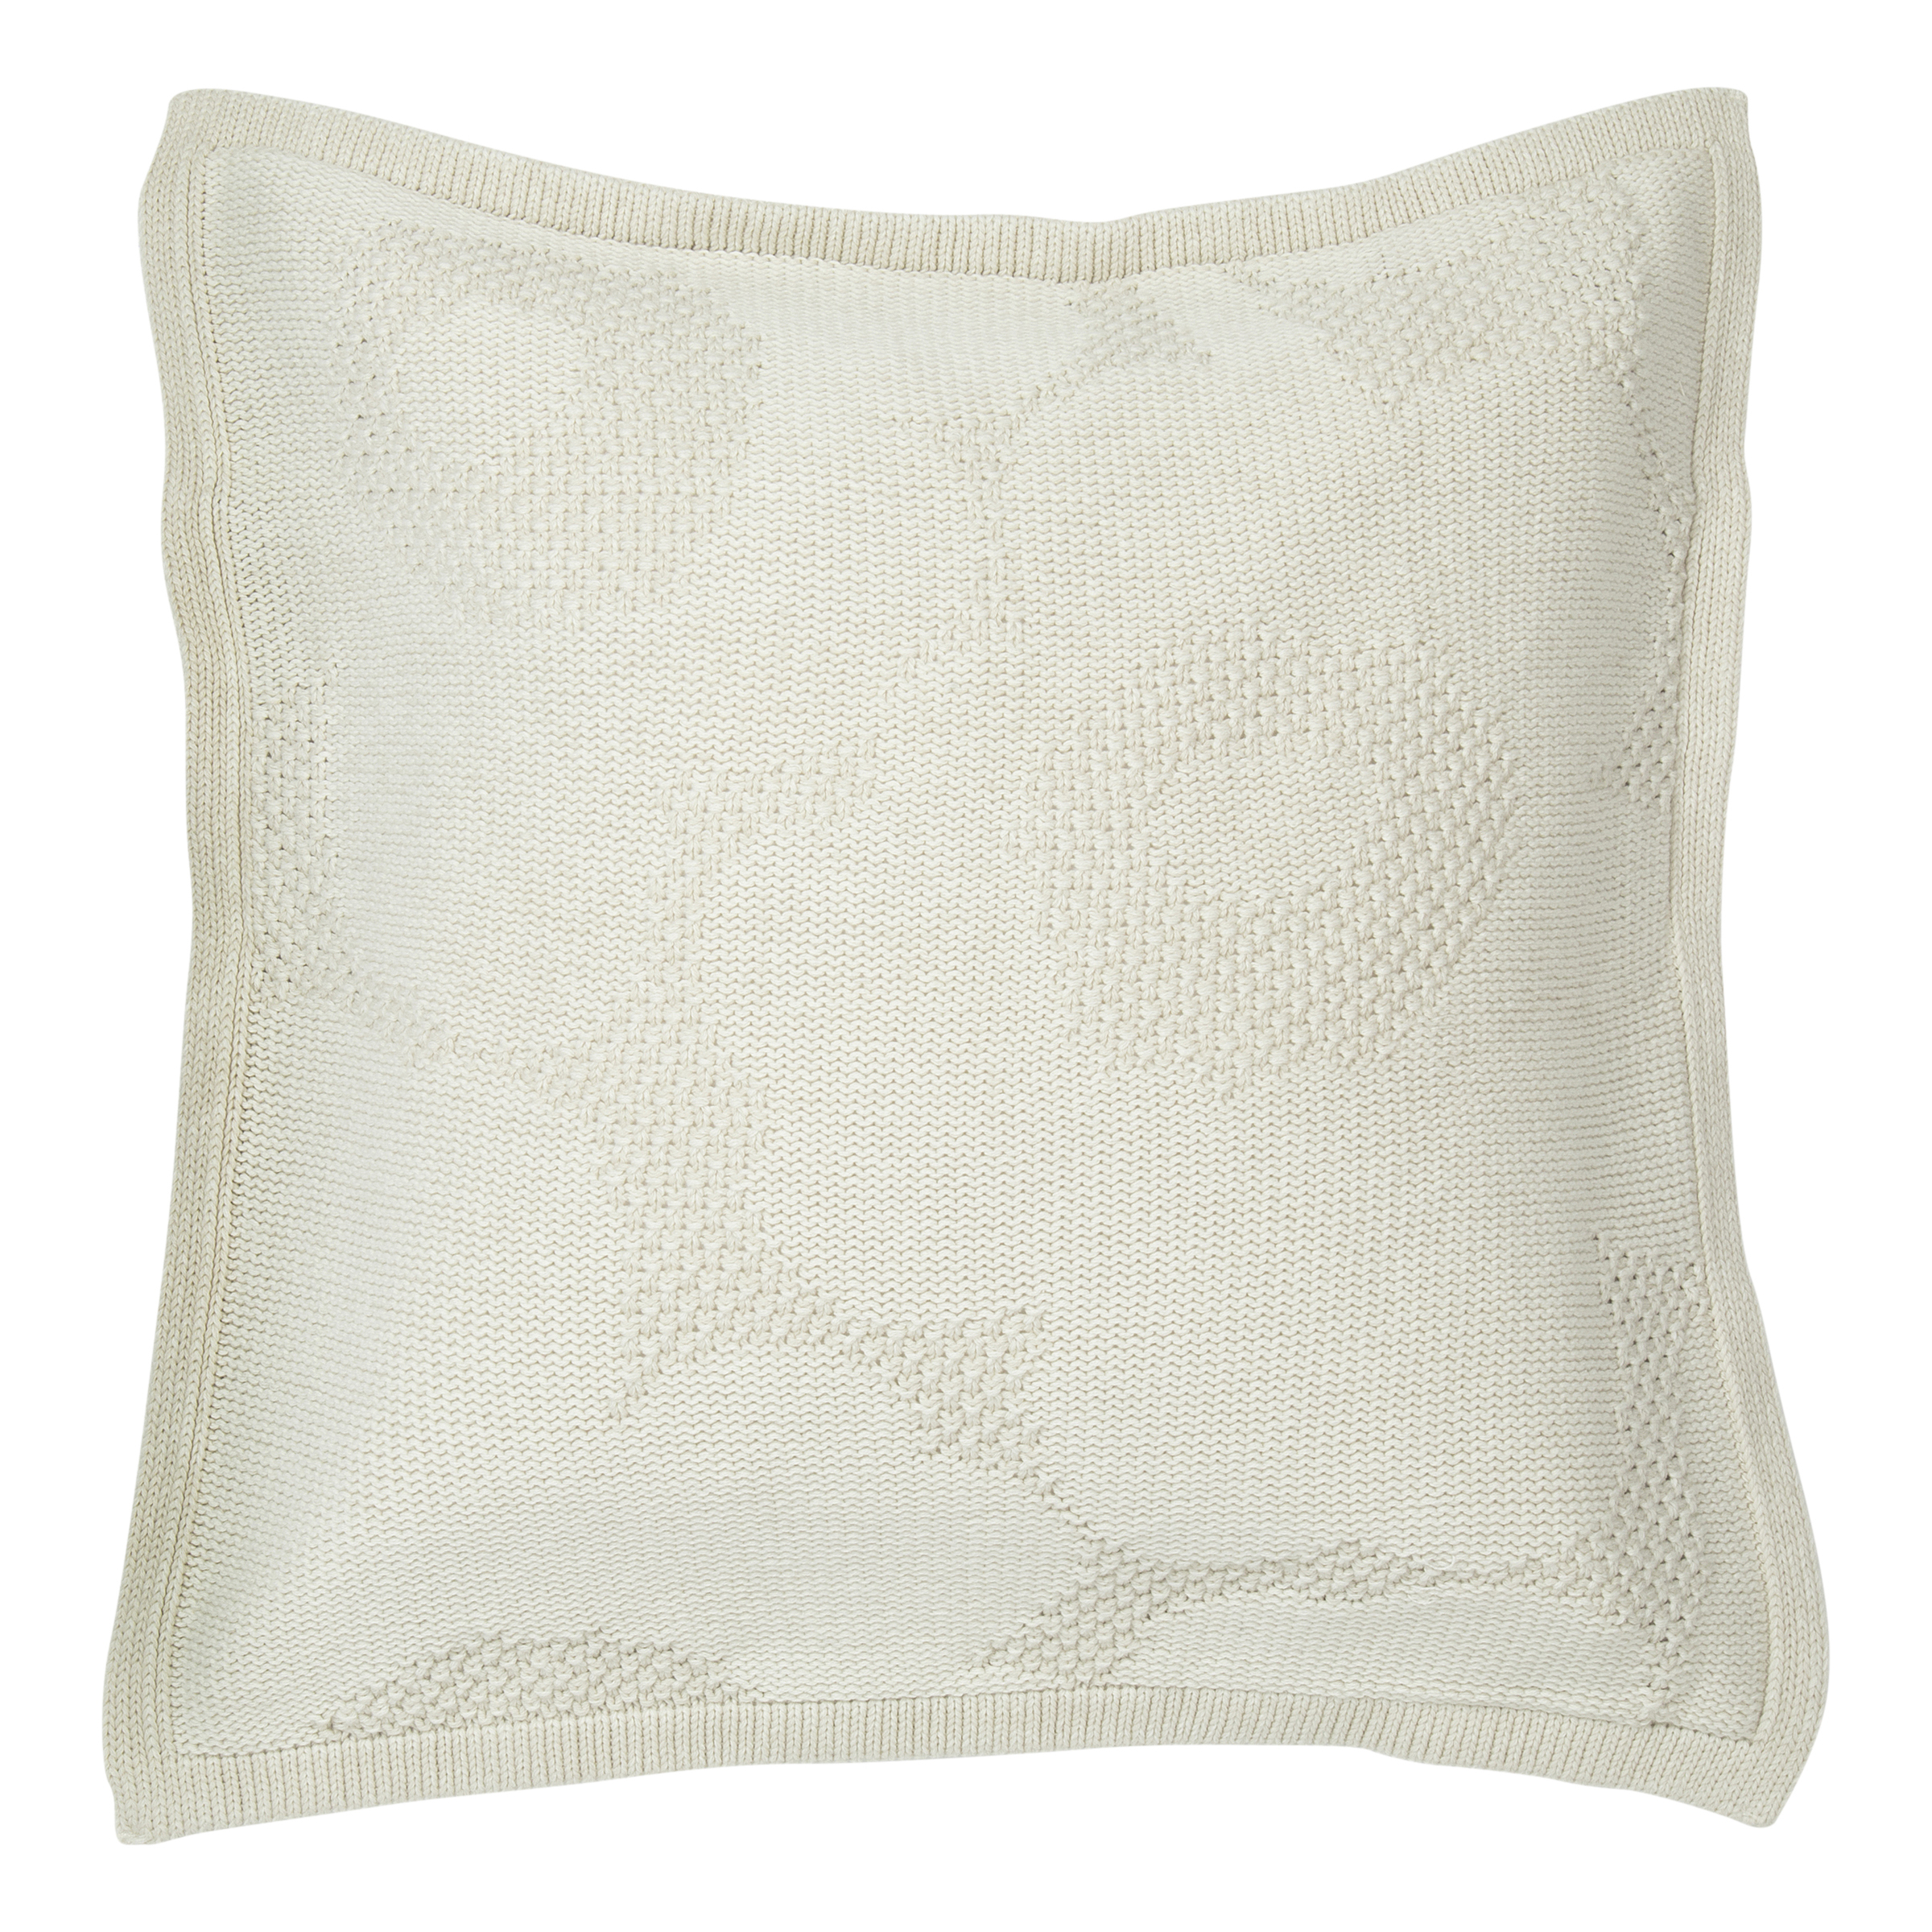 Unikko cushion cover from Marimekko 